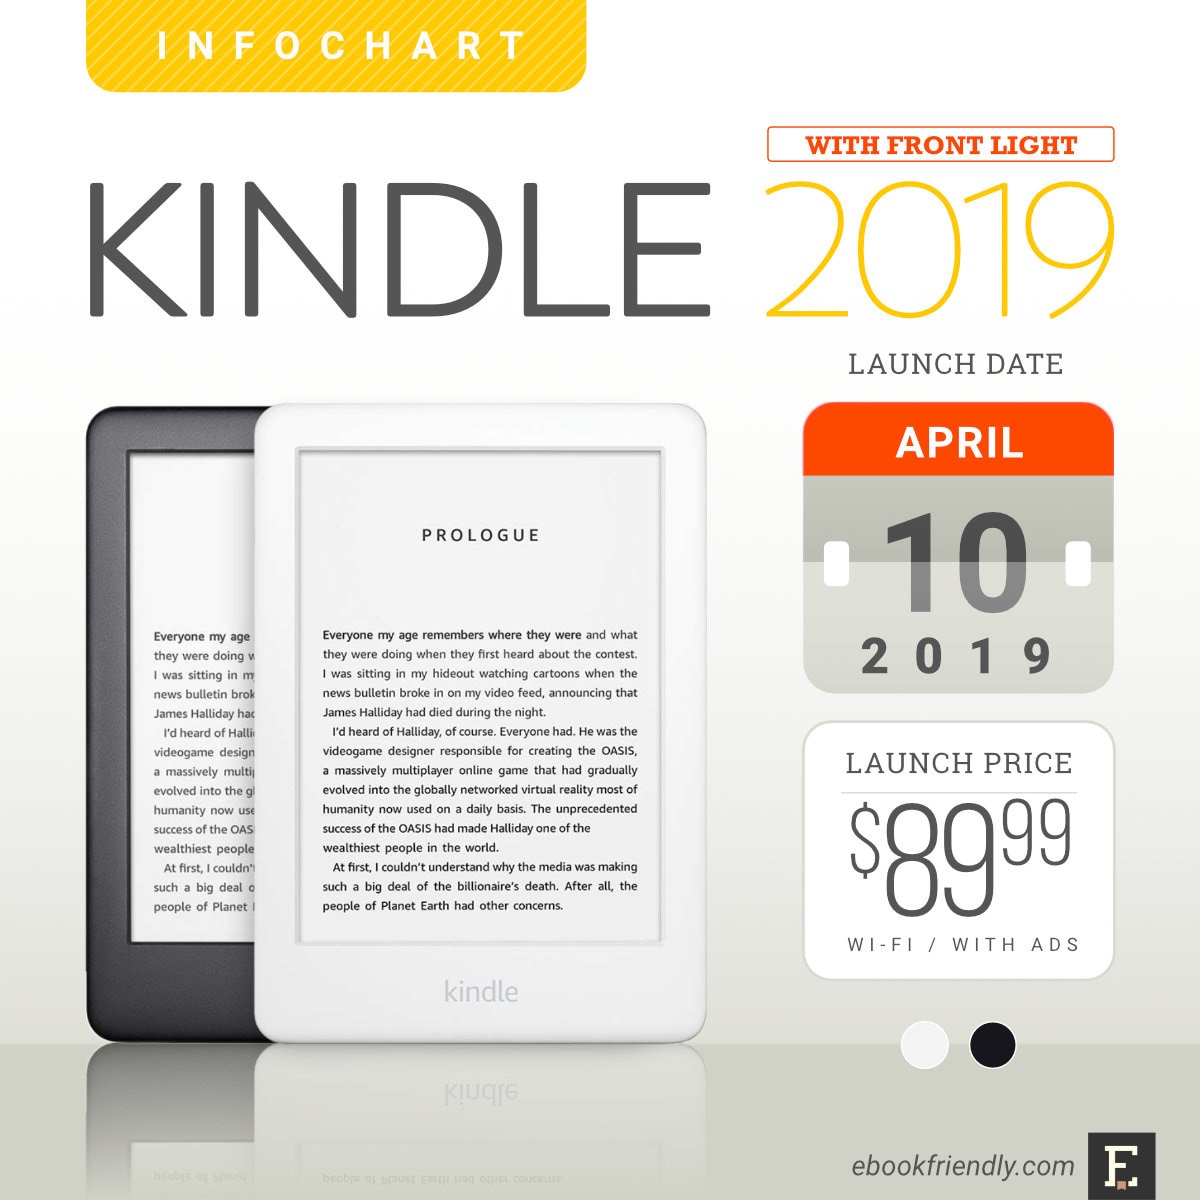 Amazon Kindle 2019 model - Black Friday 2021 price